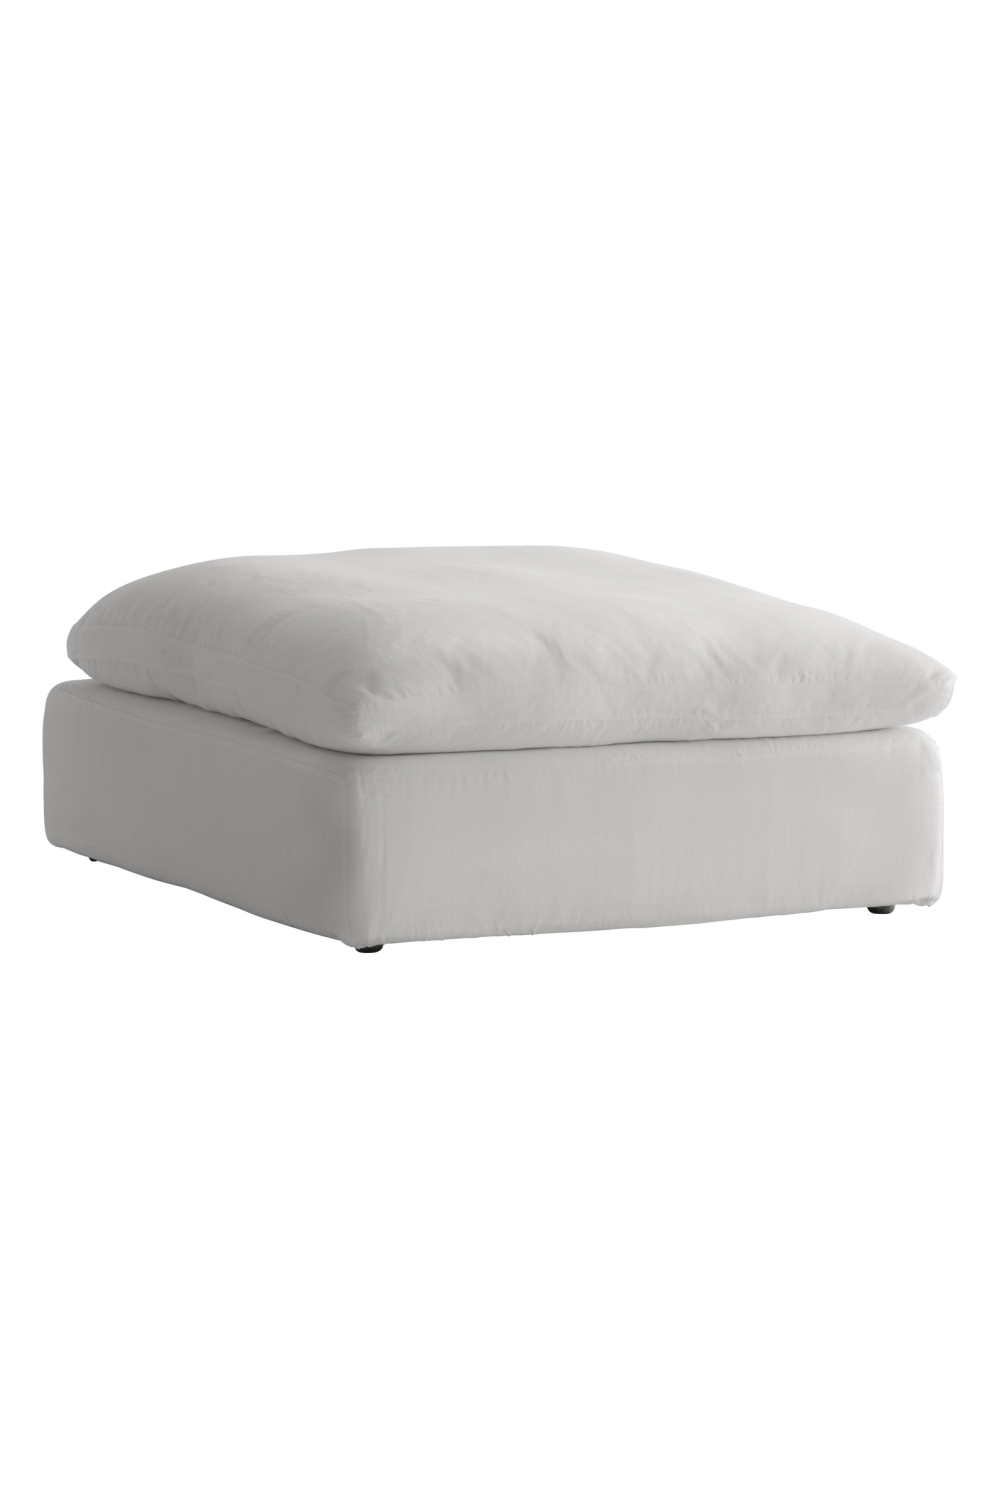 Chalk White Linen Sectional Sofa L | Andrew Martin Truman | OROA